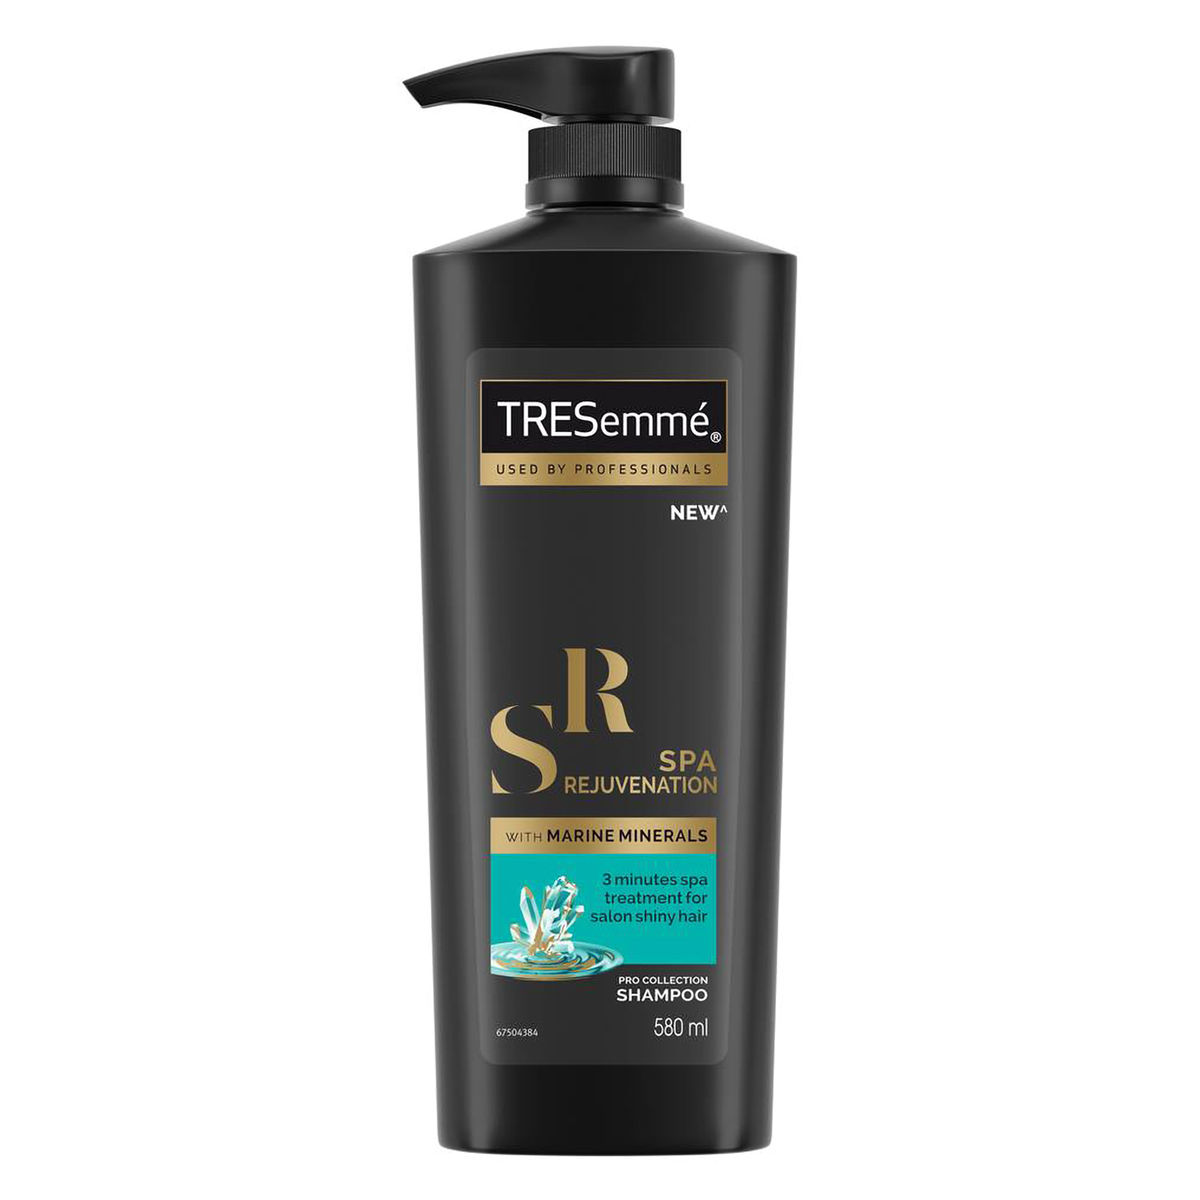 Buy Tresemme SPA Rejuvenation Shampoo, 580 ml Online